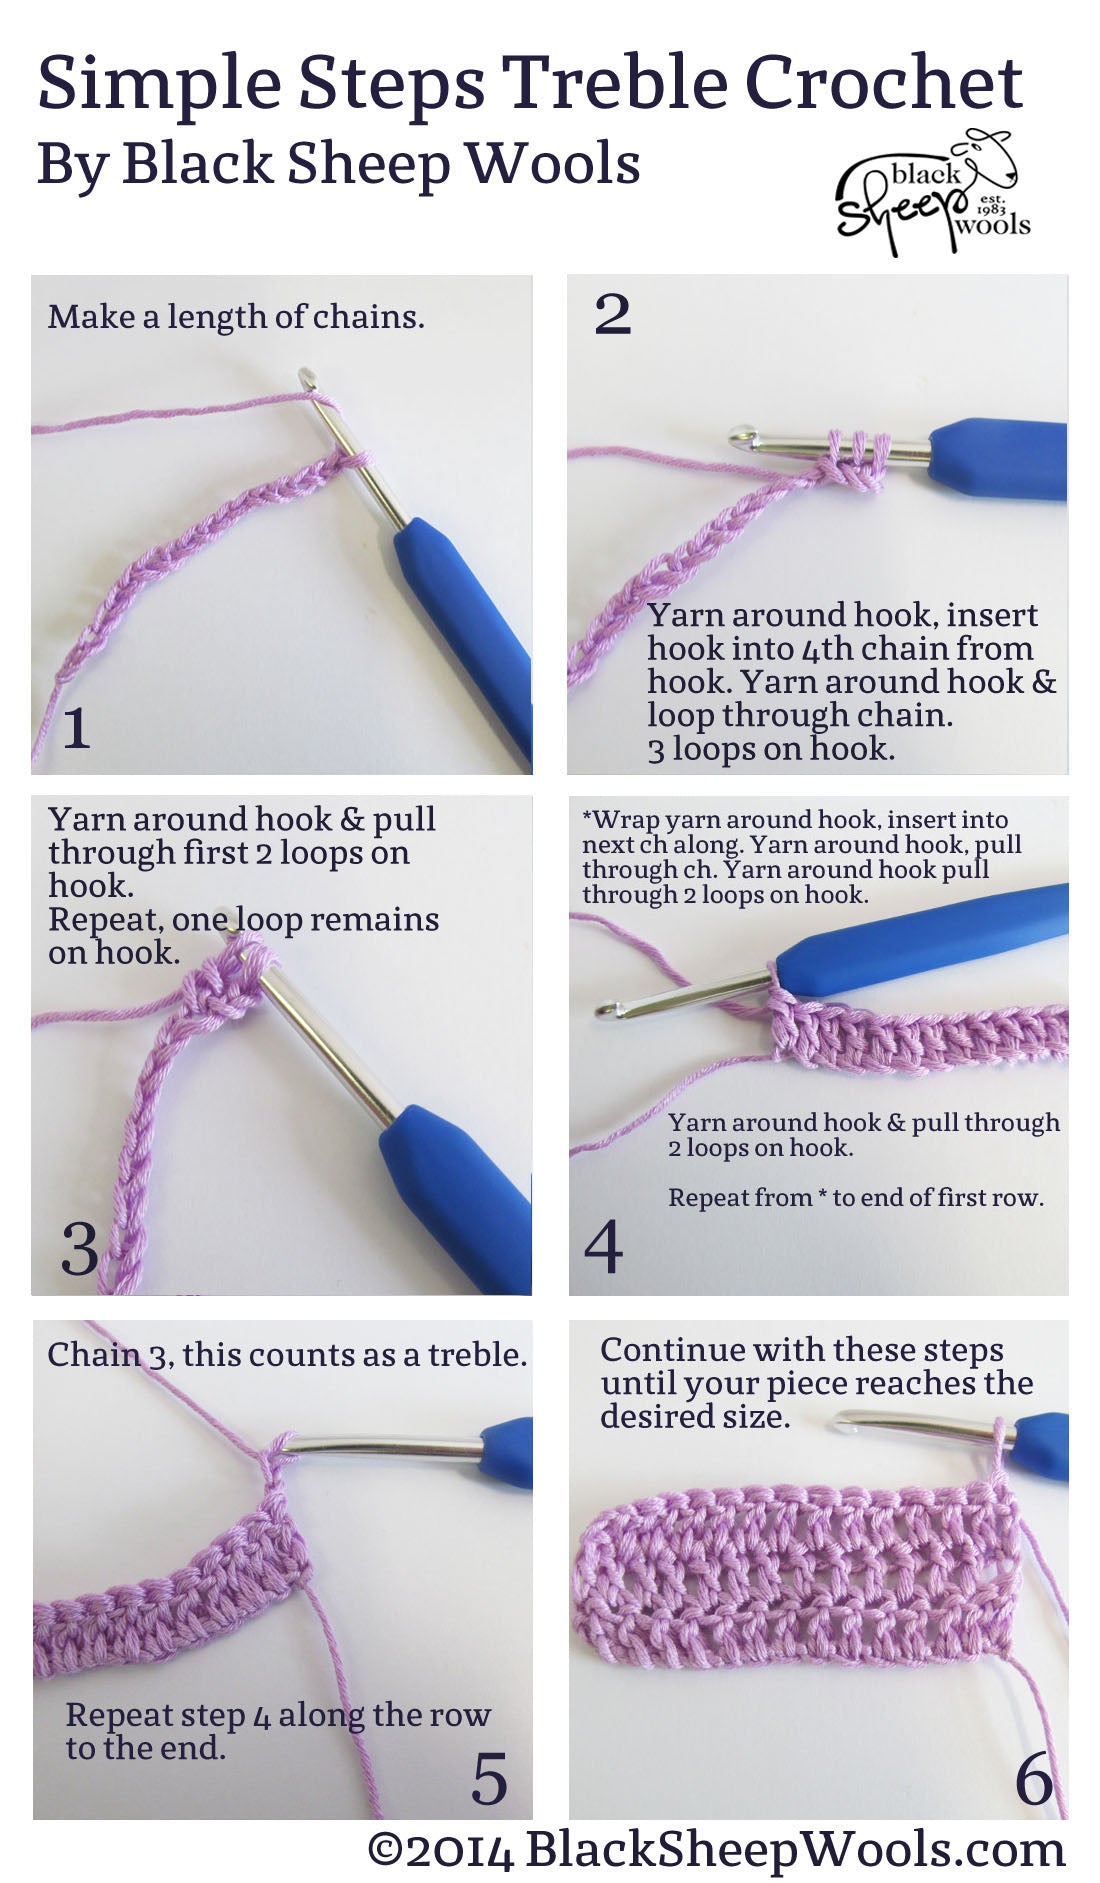 How to do a treble crochet - simple steps